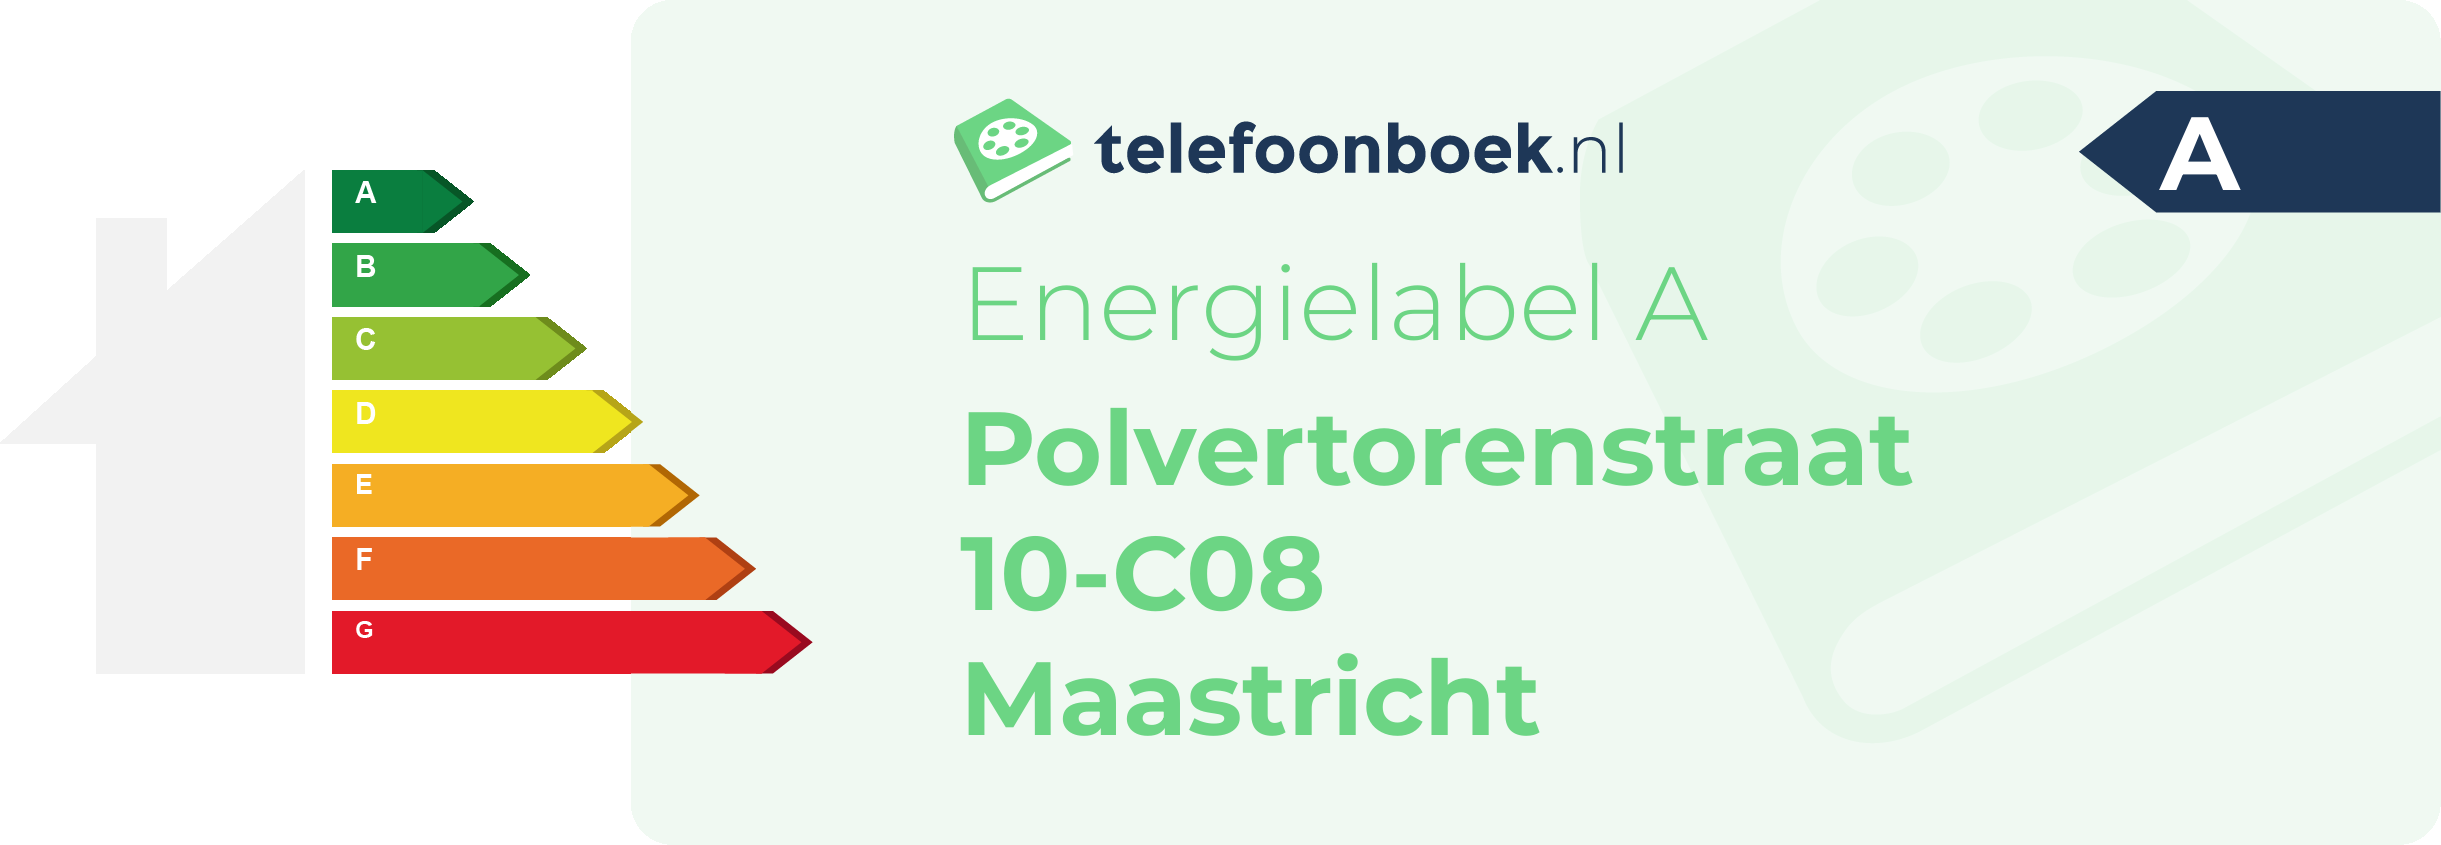 Energielabel Polvertorenstraat 10-C08 Maastricht